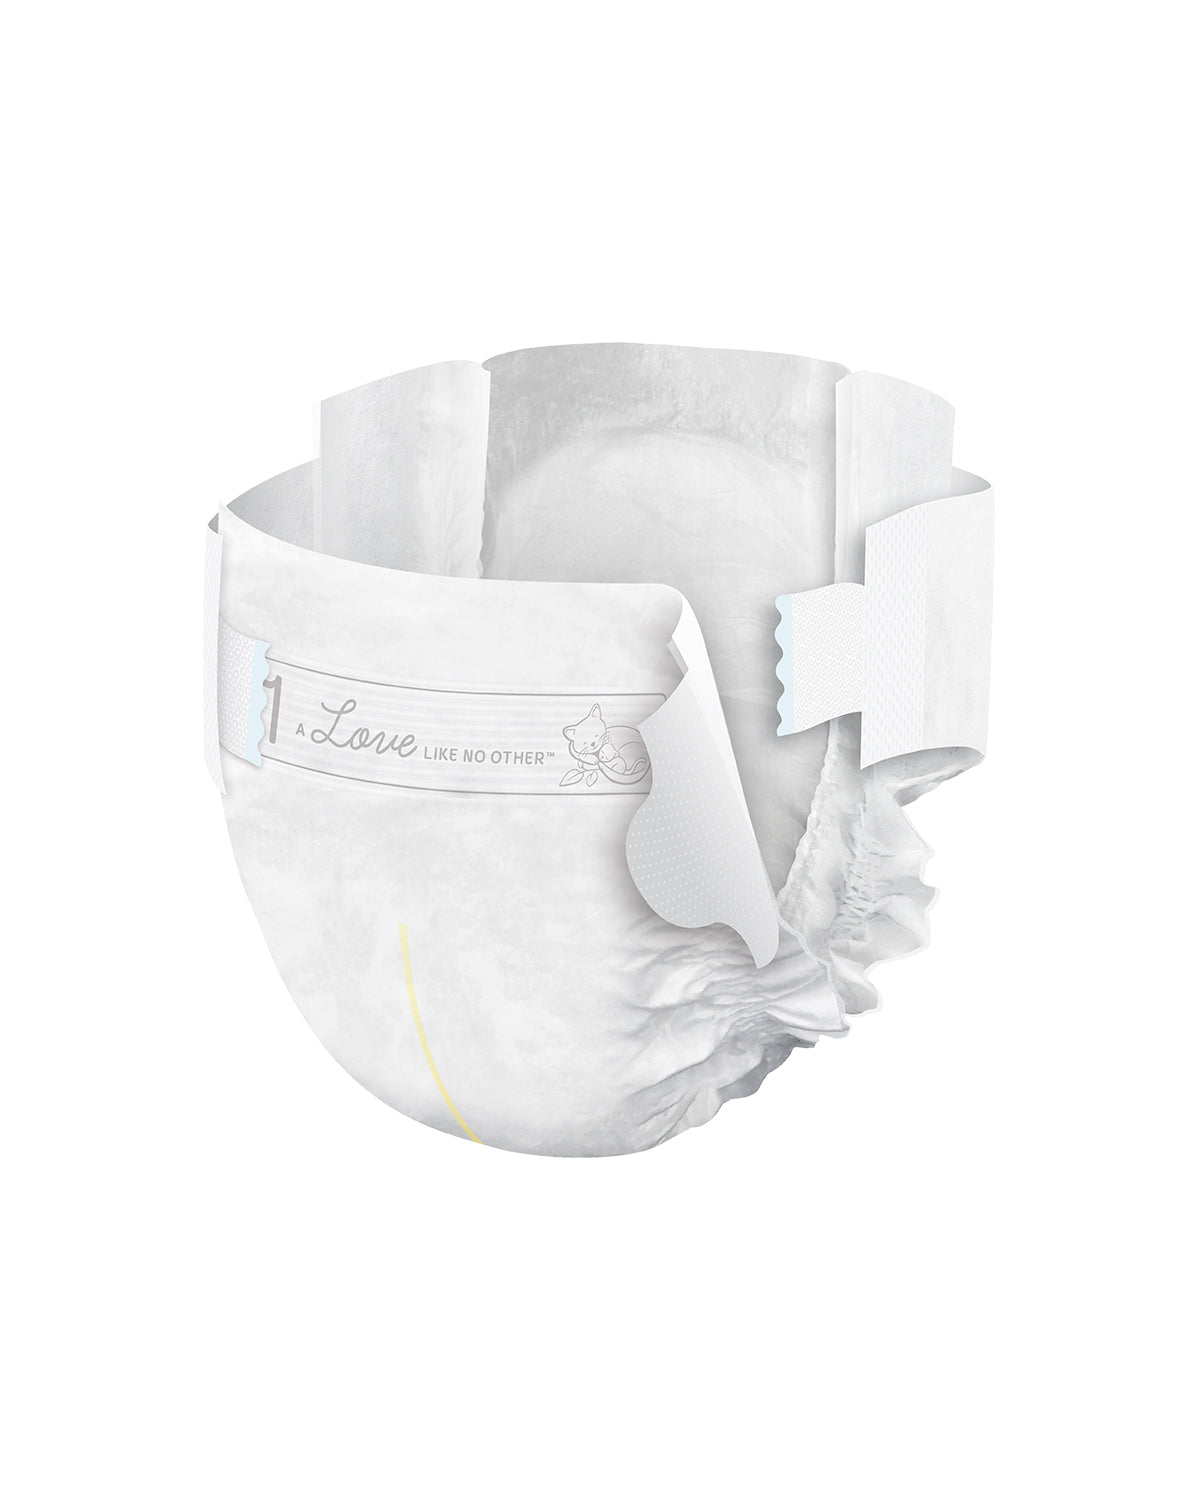 Biolane Natural baby diaper 2 size 3-6 kg 28 pieces + Gift - Veli